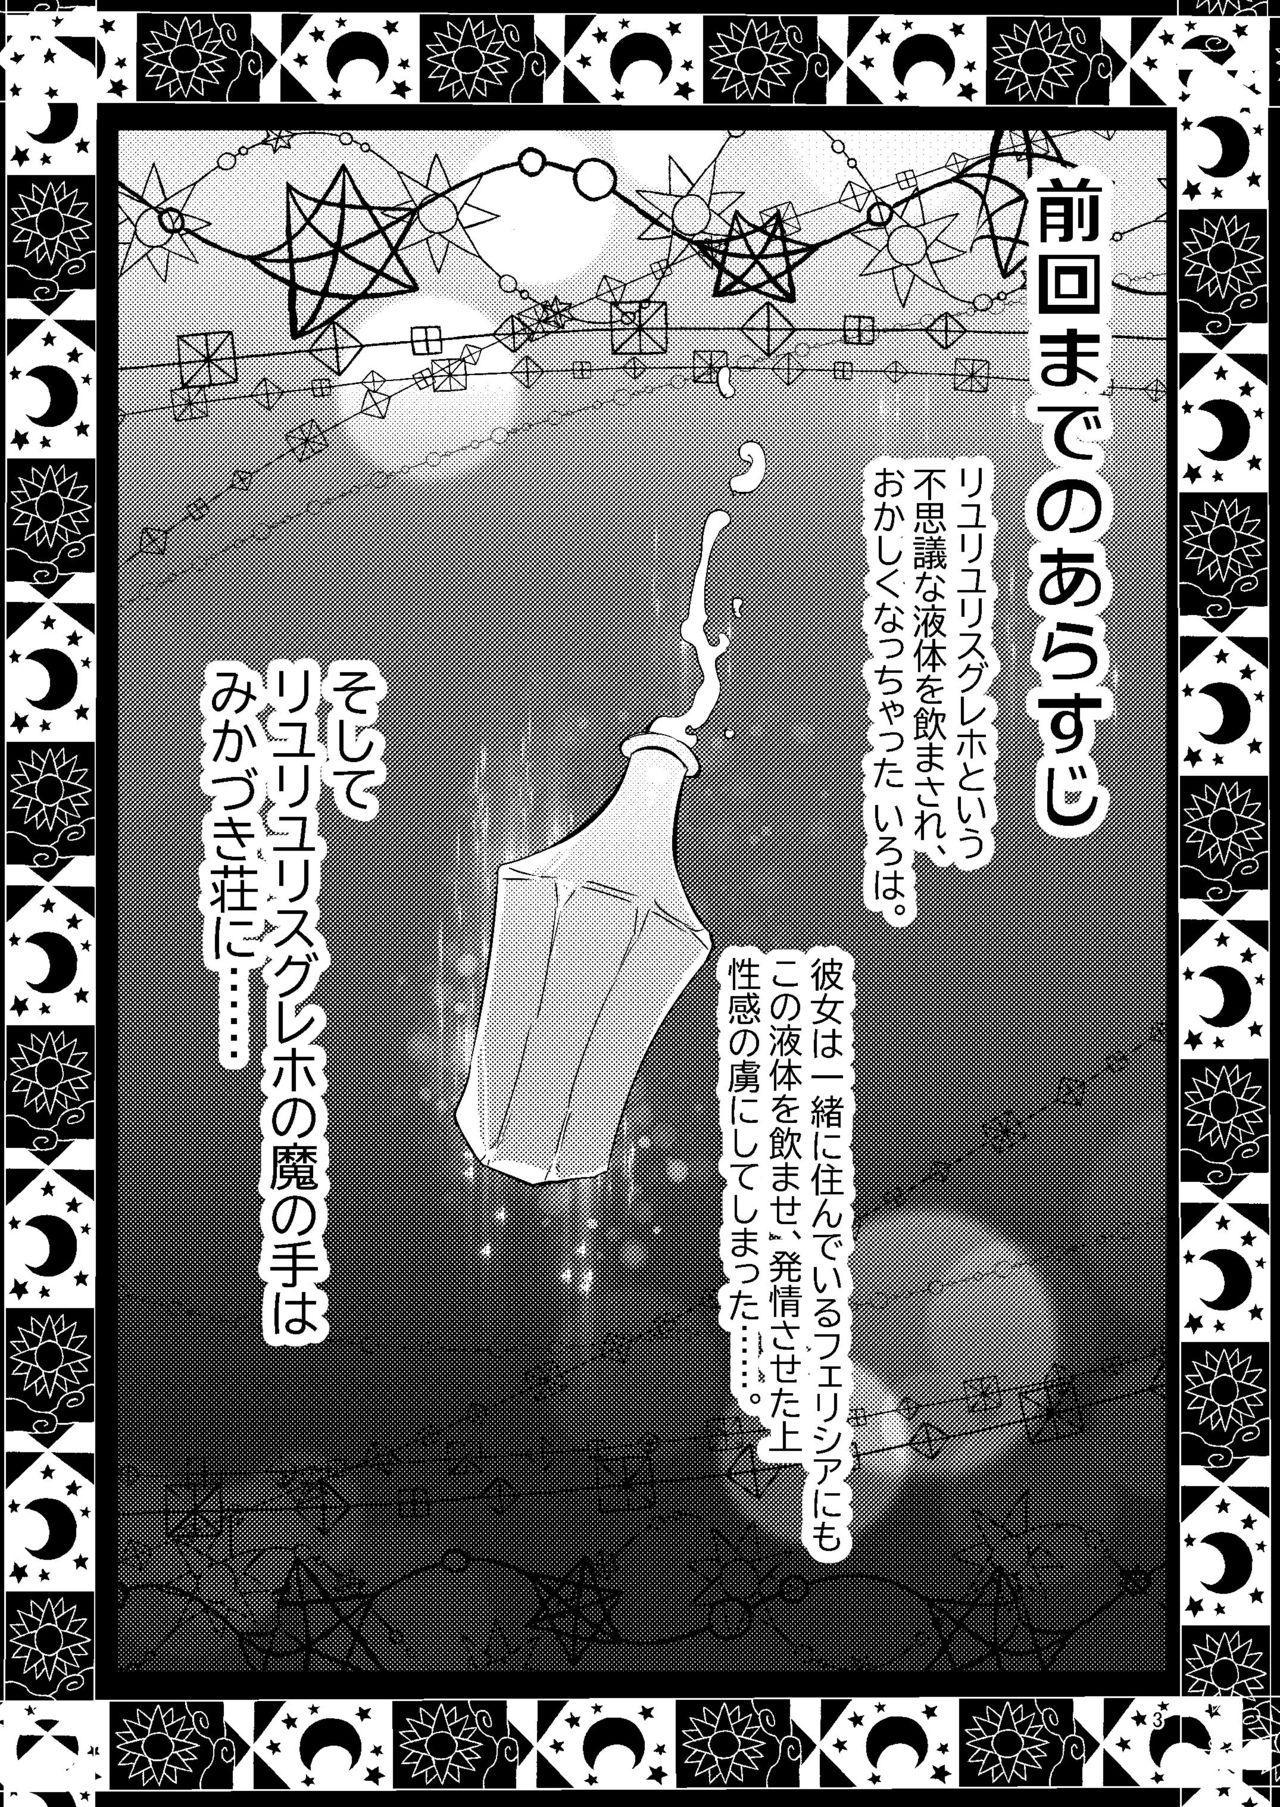 Comendo Riyuriyu Risugureho no Uwasa 3 - Puella magi madoka magica side story magia record Hooker - Page 2